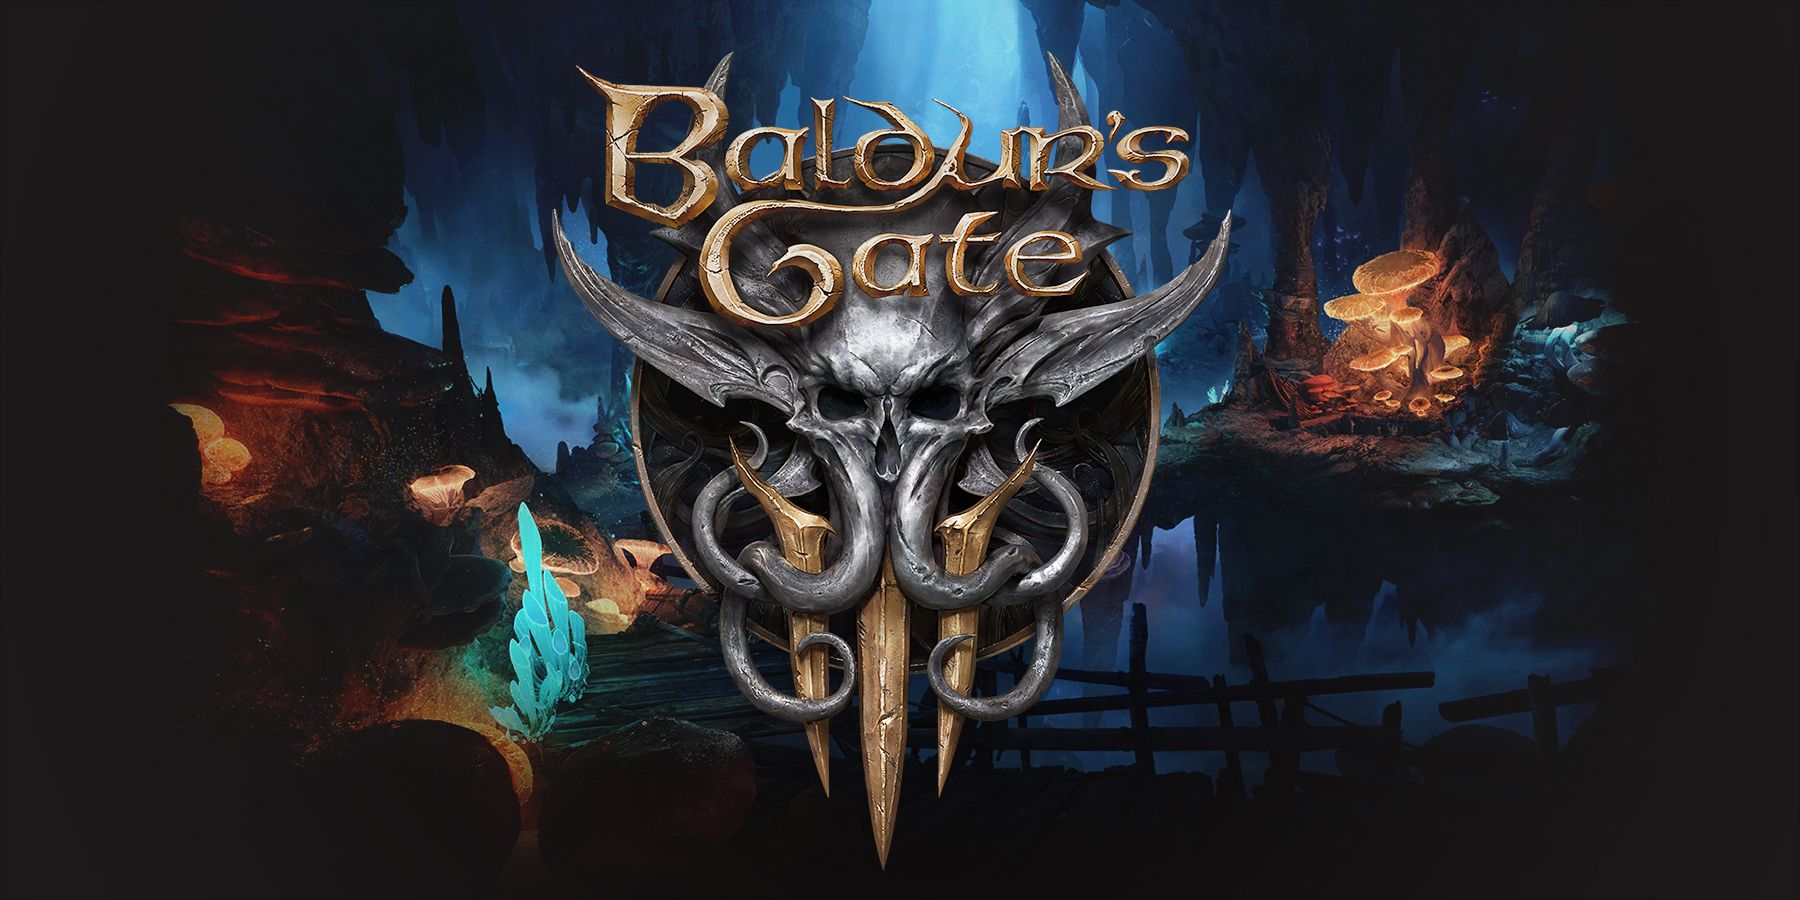 Baldurs Gate 3 logo over Underdark loading screen artwork